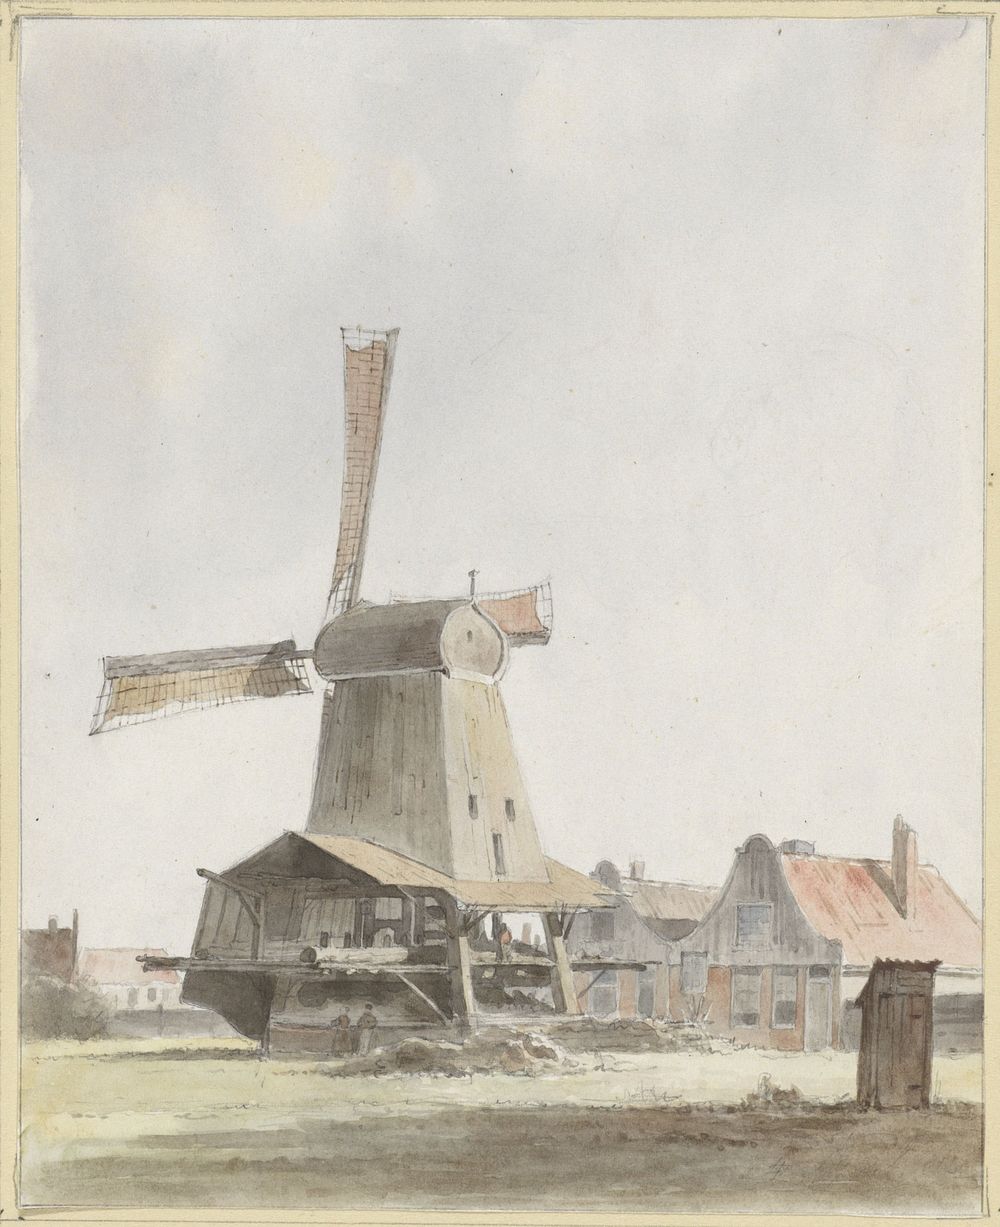 Houtzaagmolen (1845) by Hendrik Abraham Klinkhamer